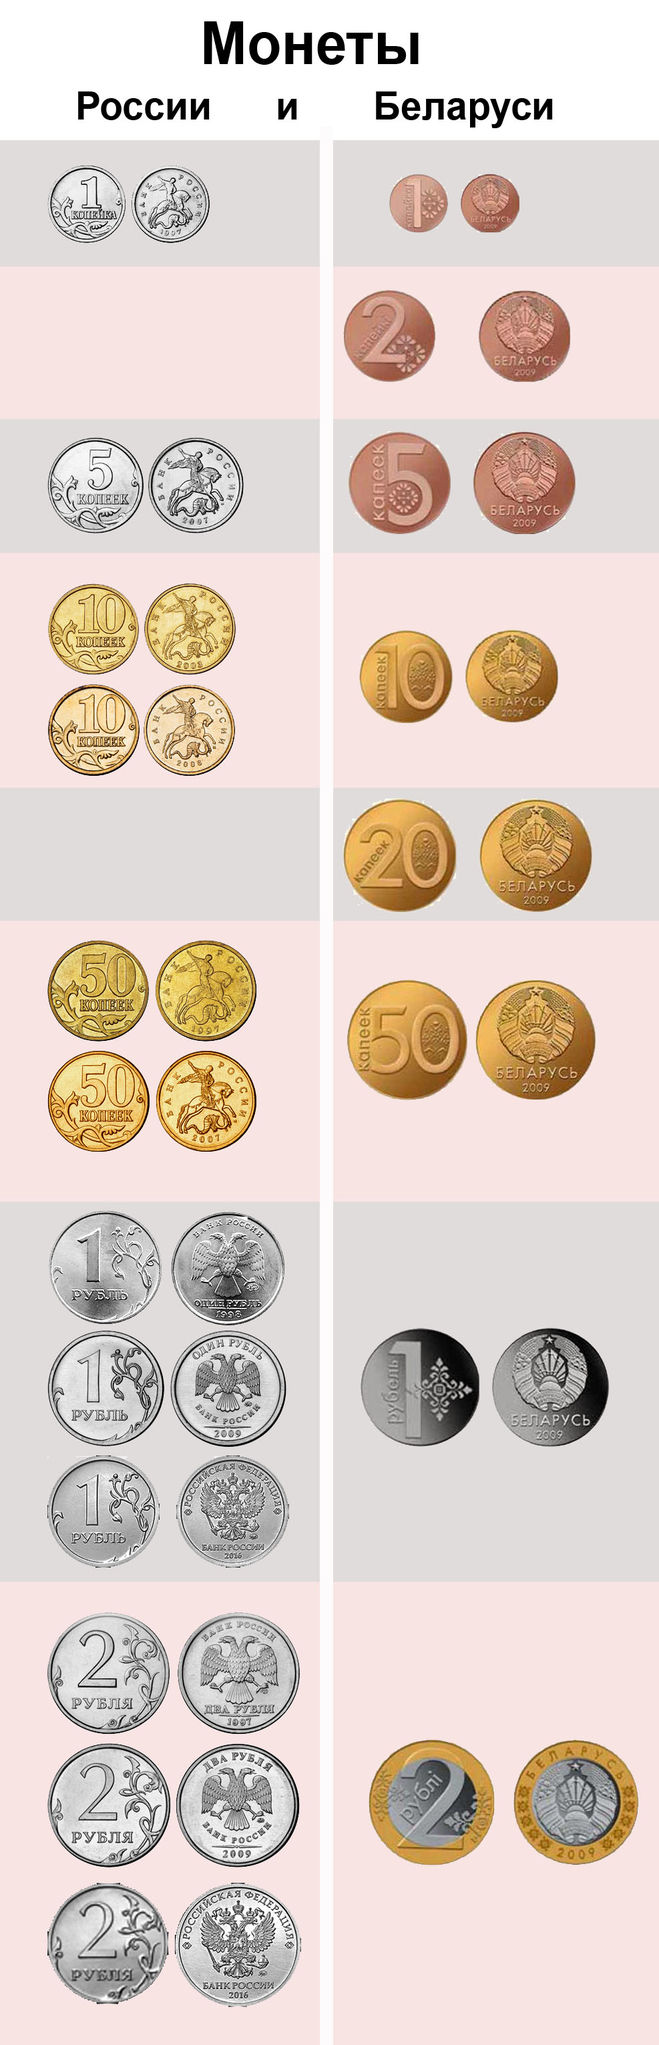 Монеты России и Беларуси